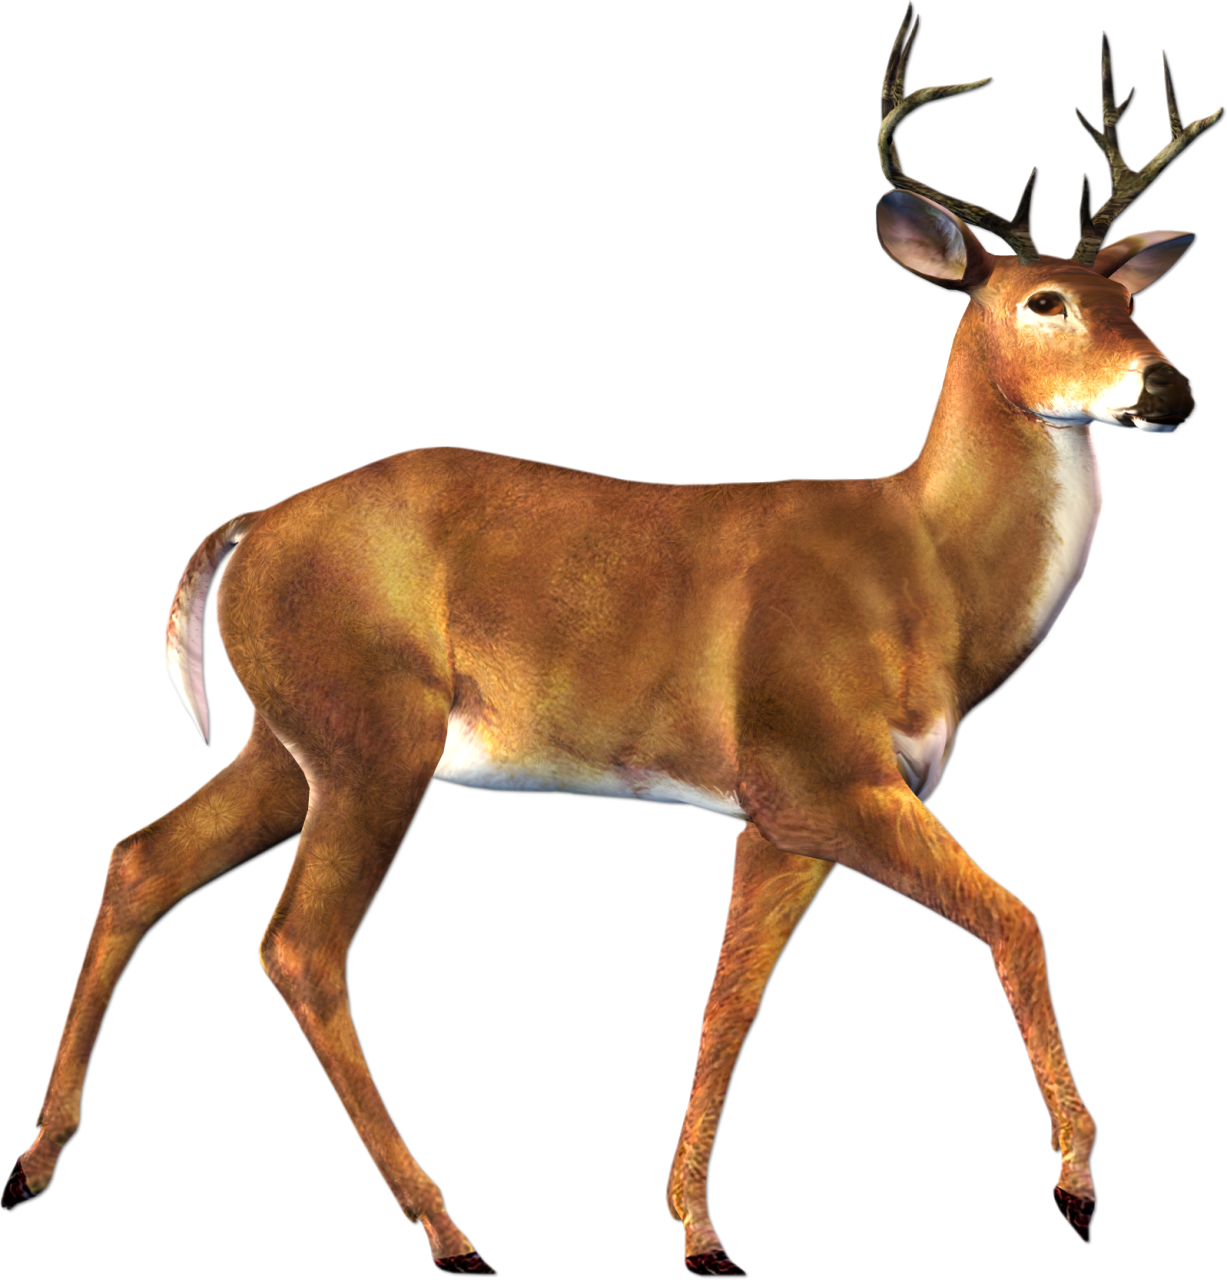 Deer Buck Images Image Free Download Png Clipart